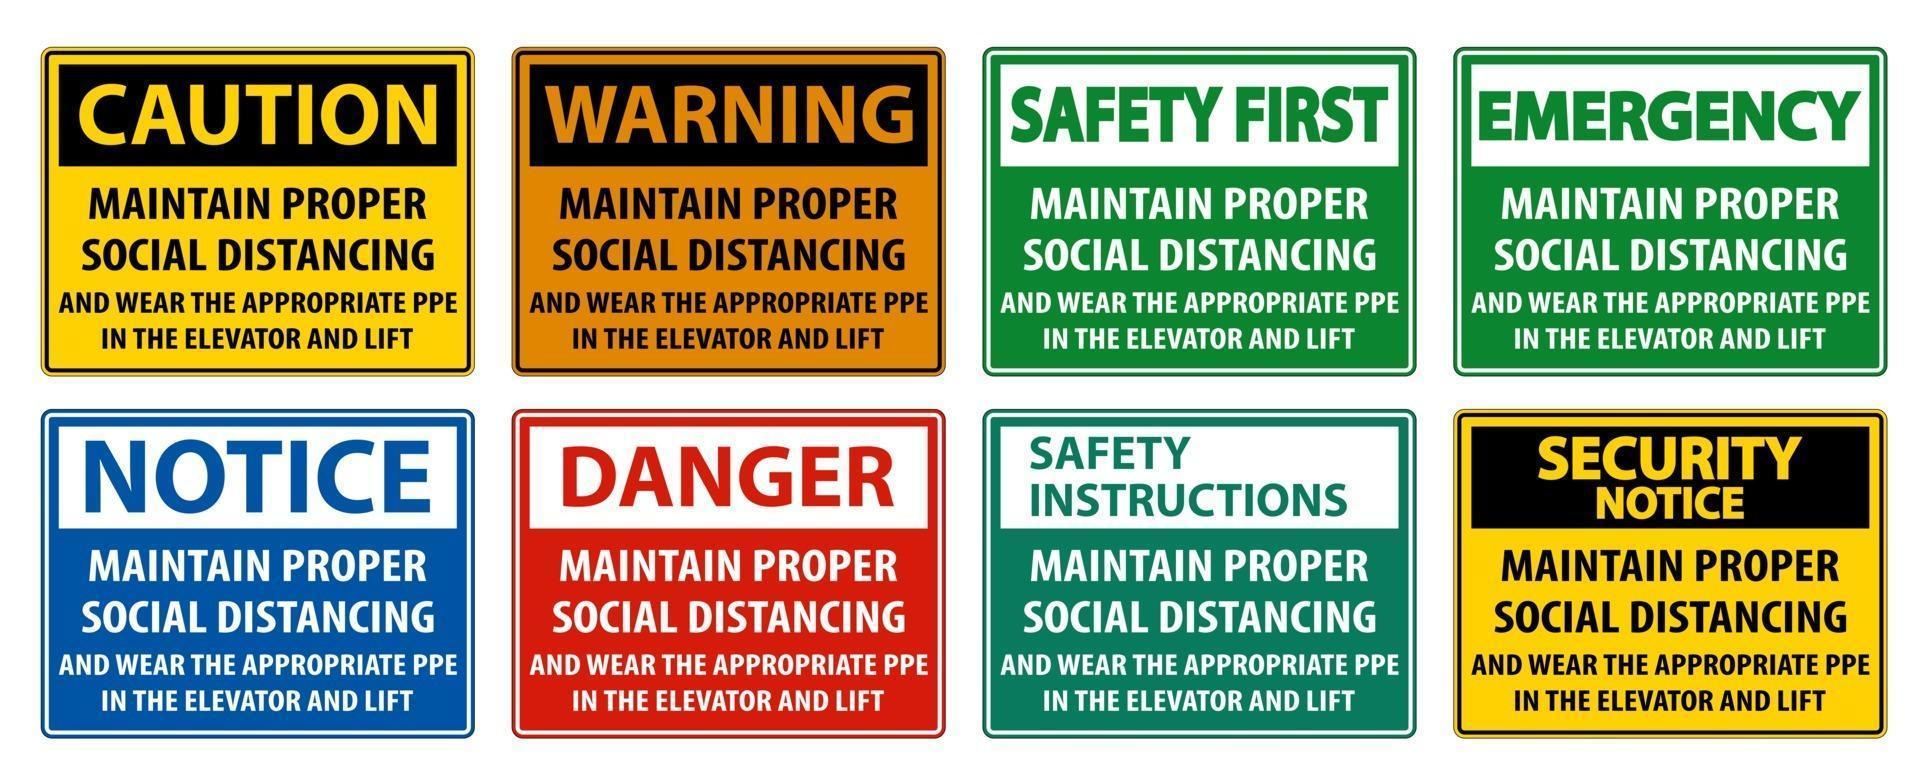 Maintain Proper Social Distancing Sign vector